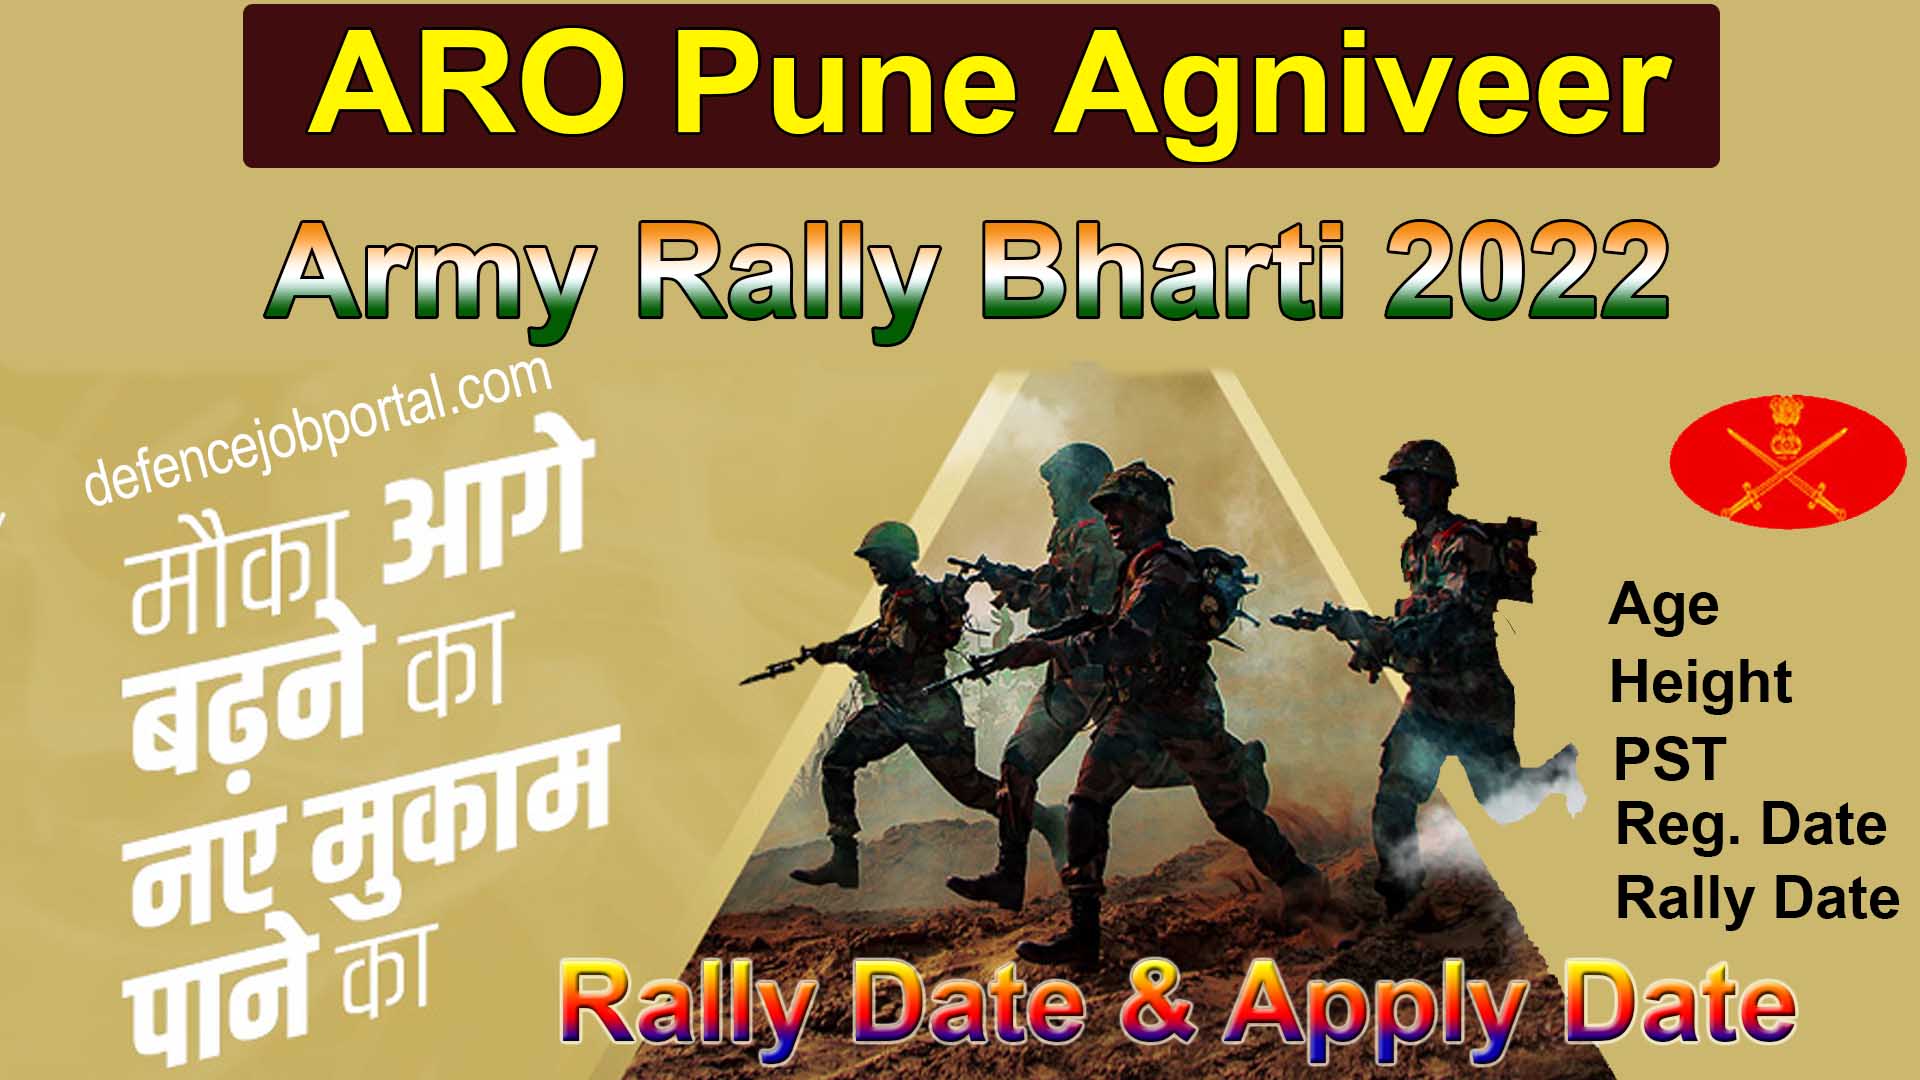 Pune Agniveer Army Rally Bharti 2022